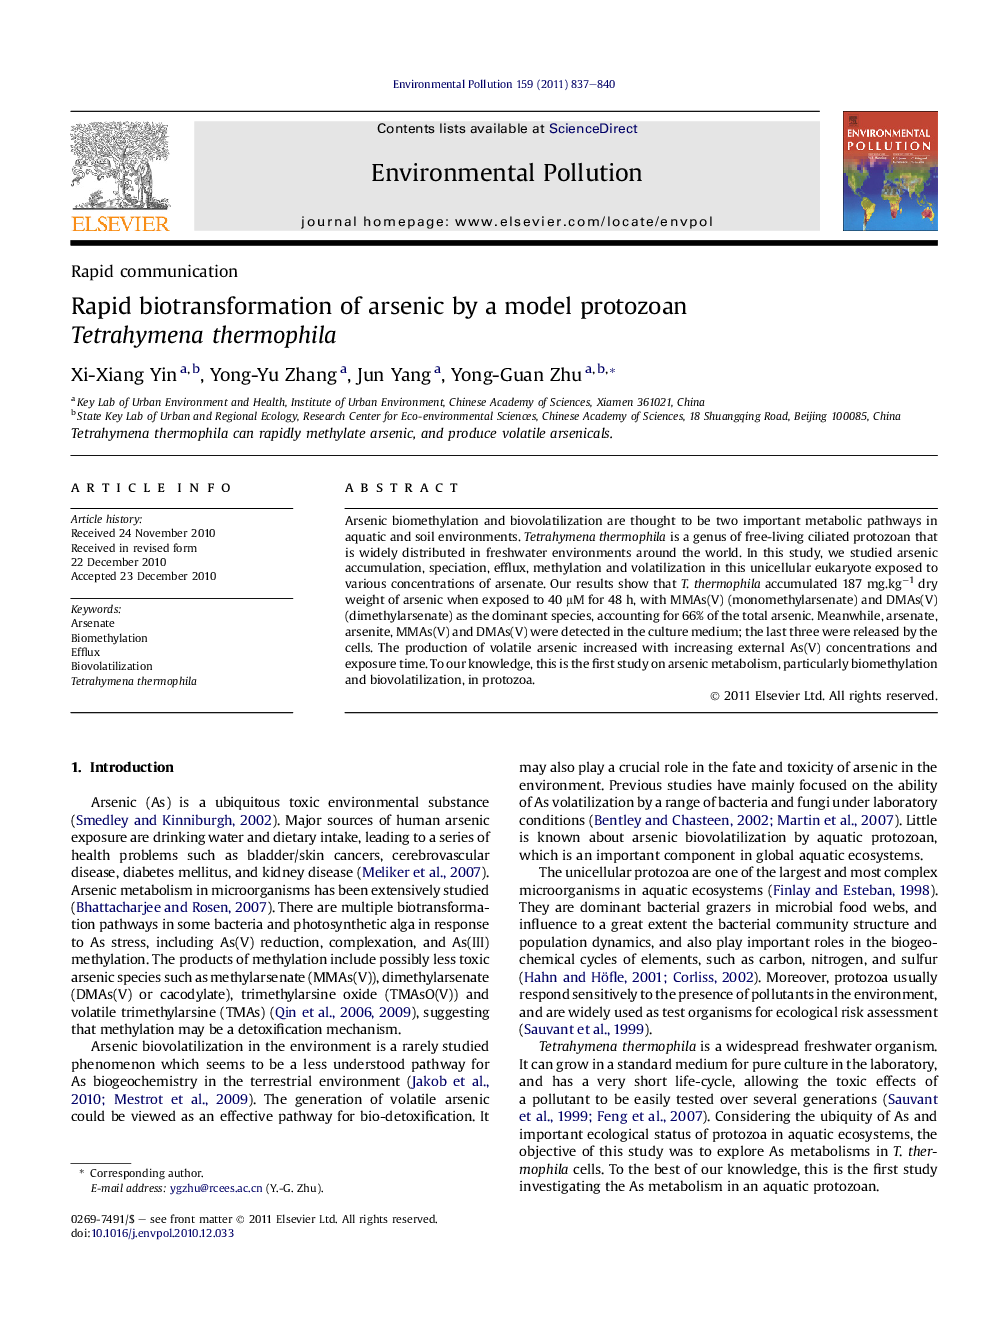 Rapid biotransformation of arsenic by a model protozoan Tetrahymena thermophila